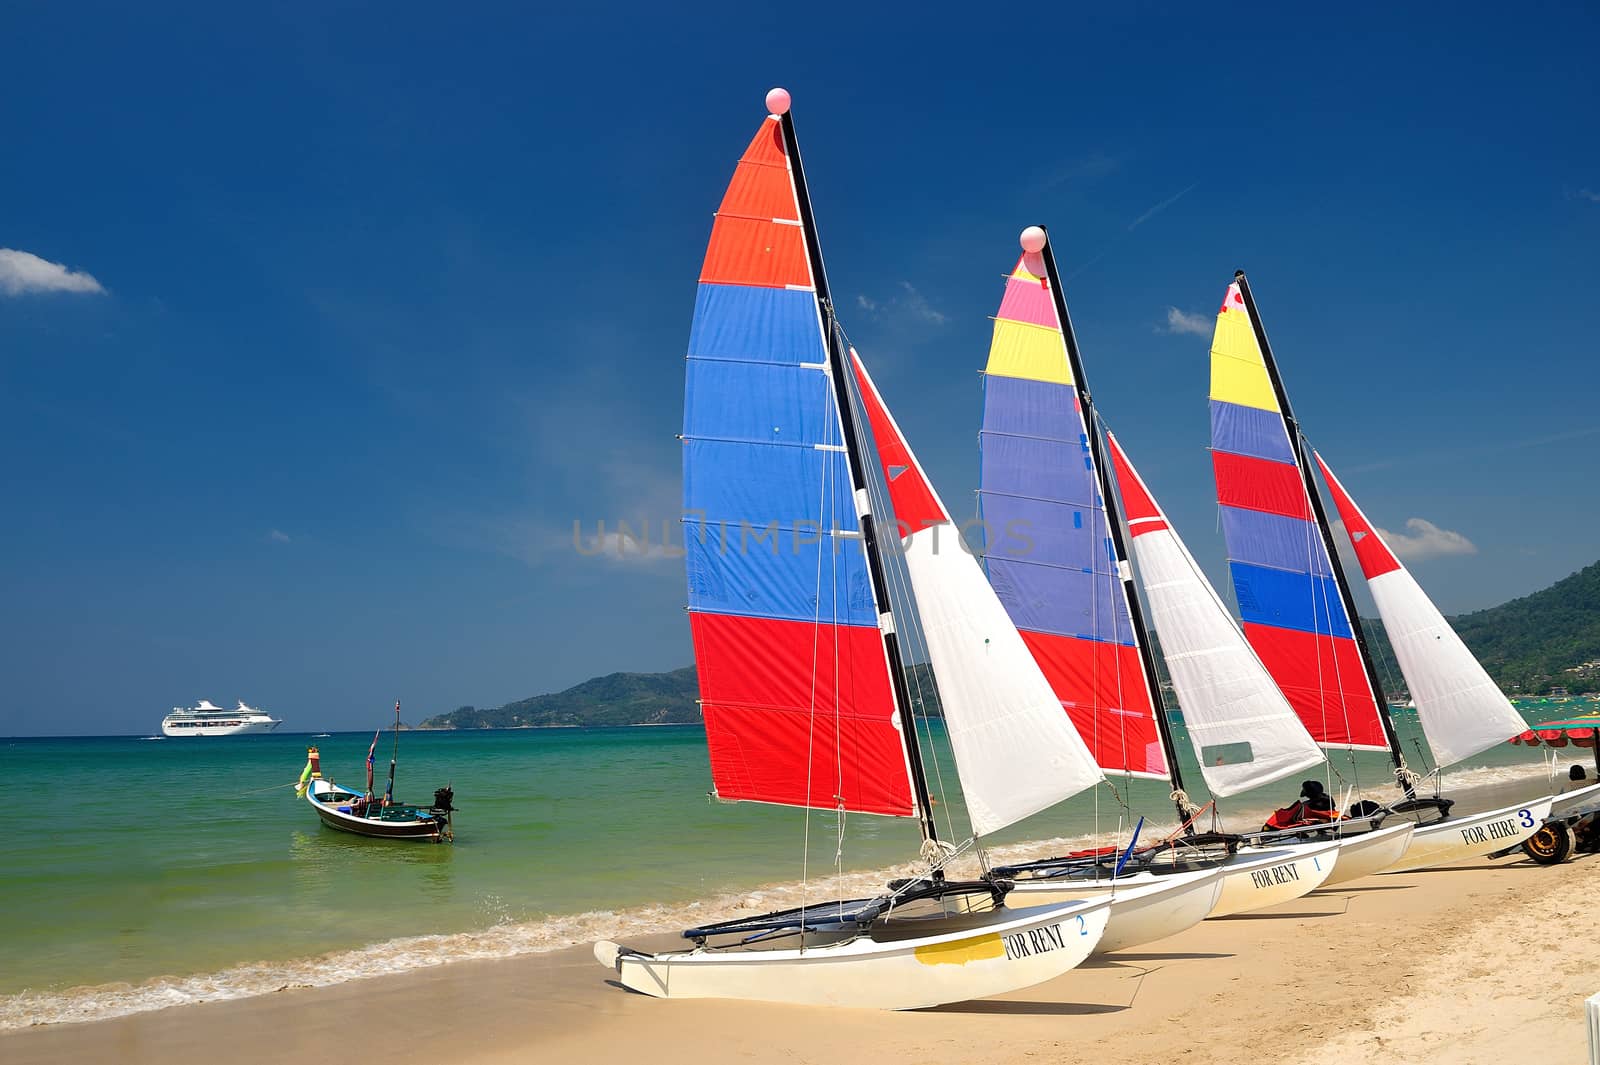 sail boat on patong beach, phuket, thailand by think4photop